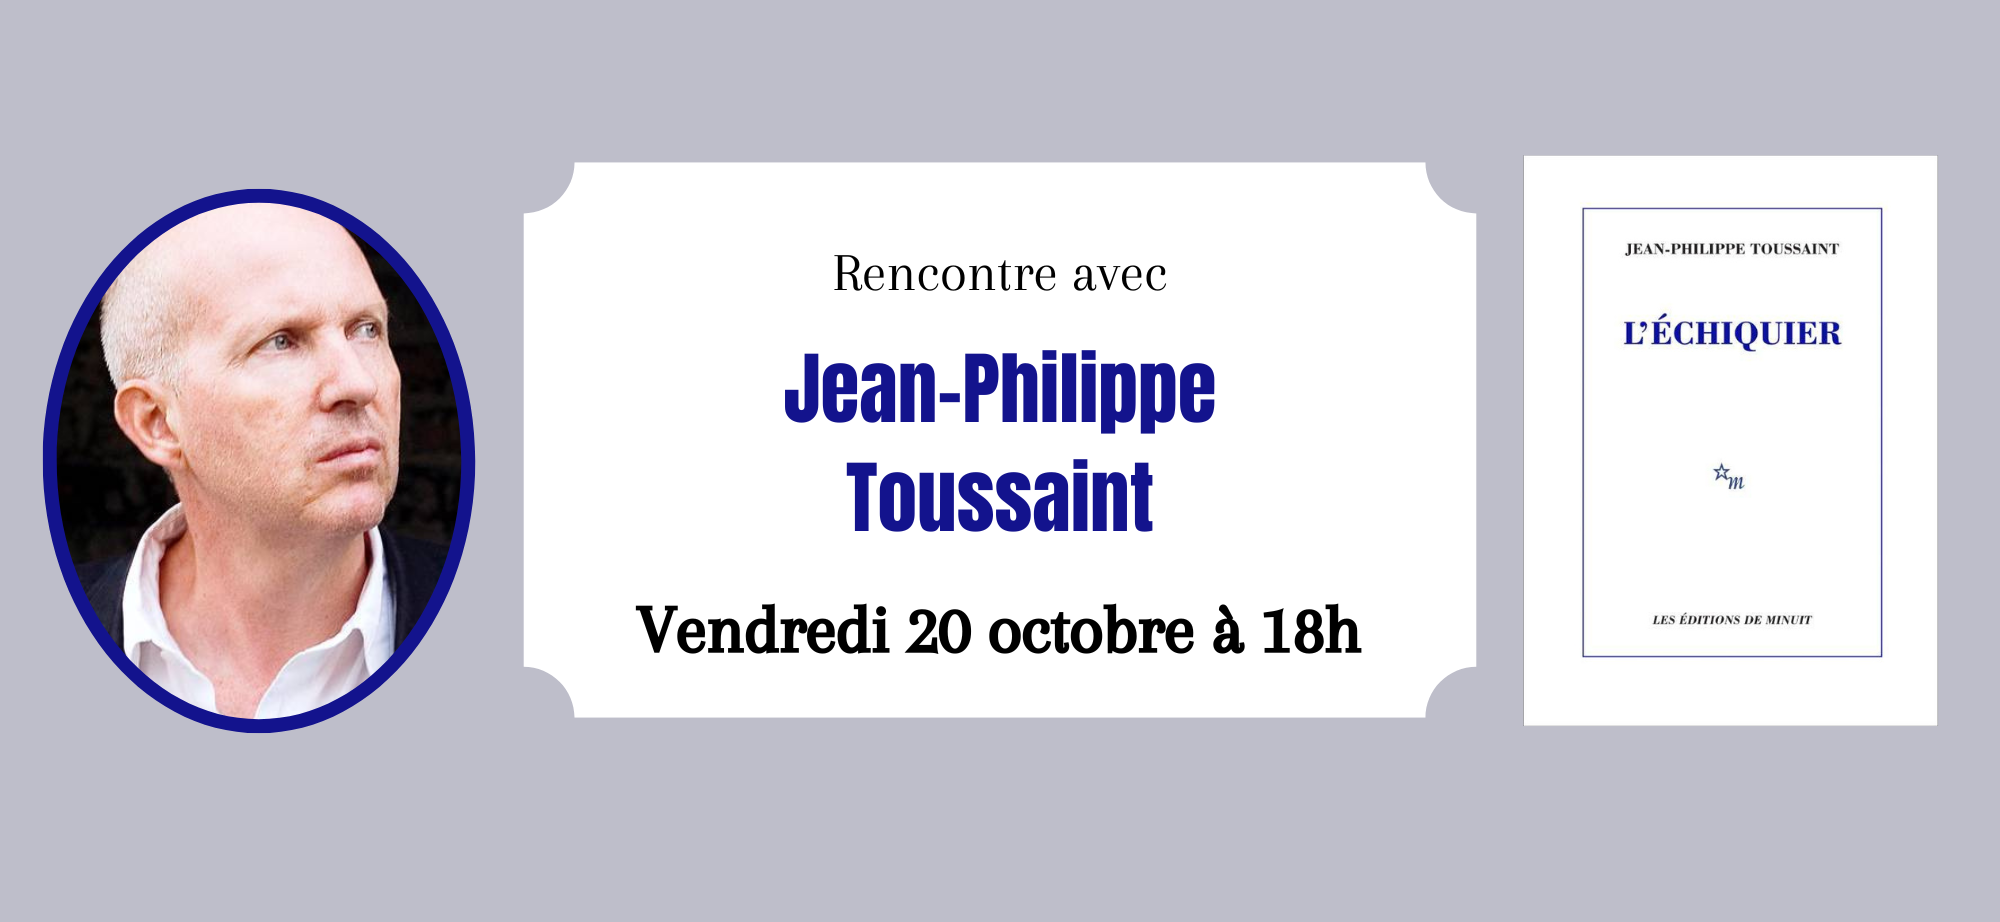 Jean-Philippe Toussaint